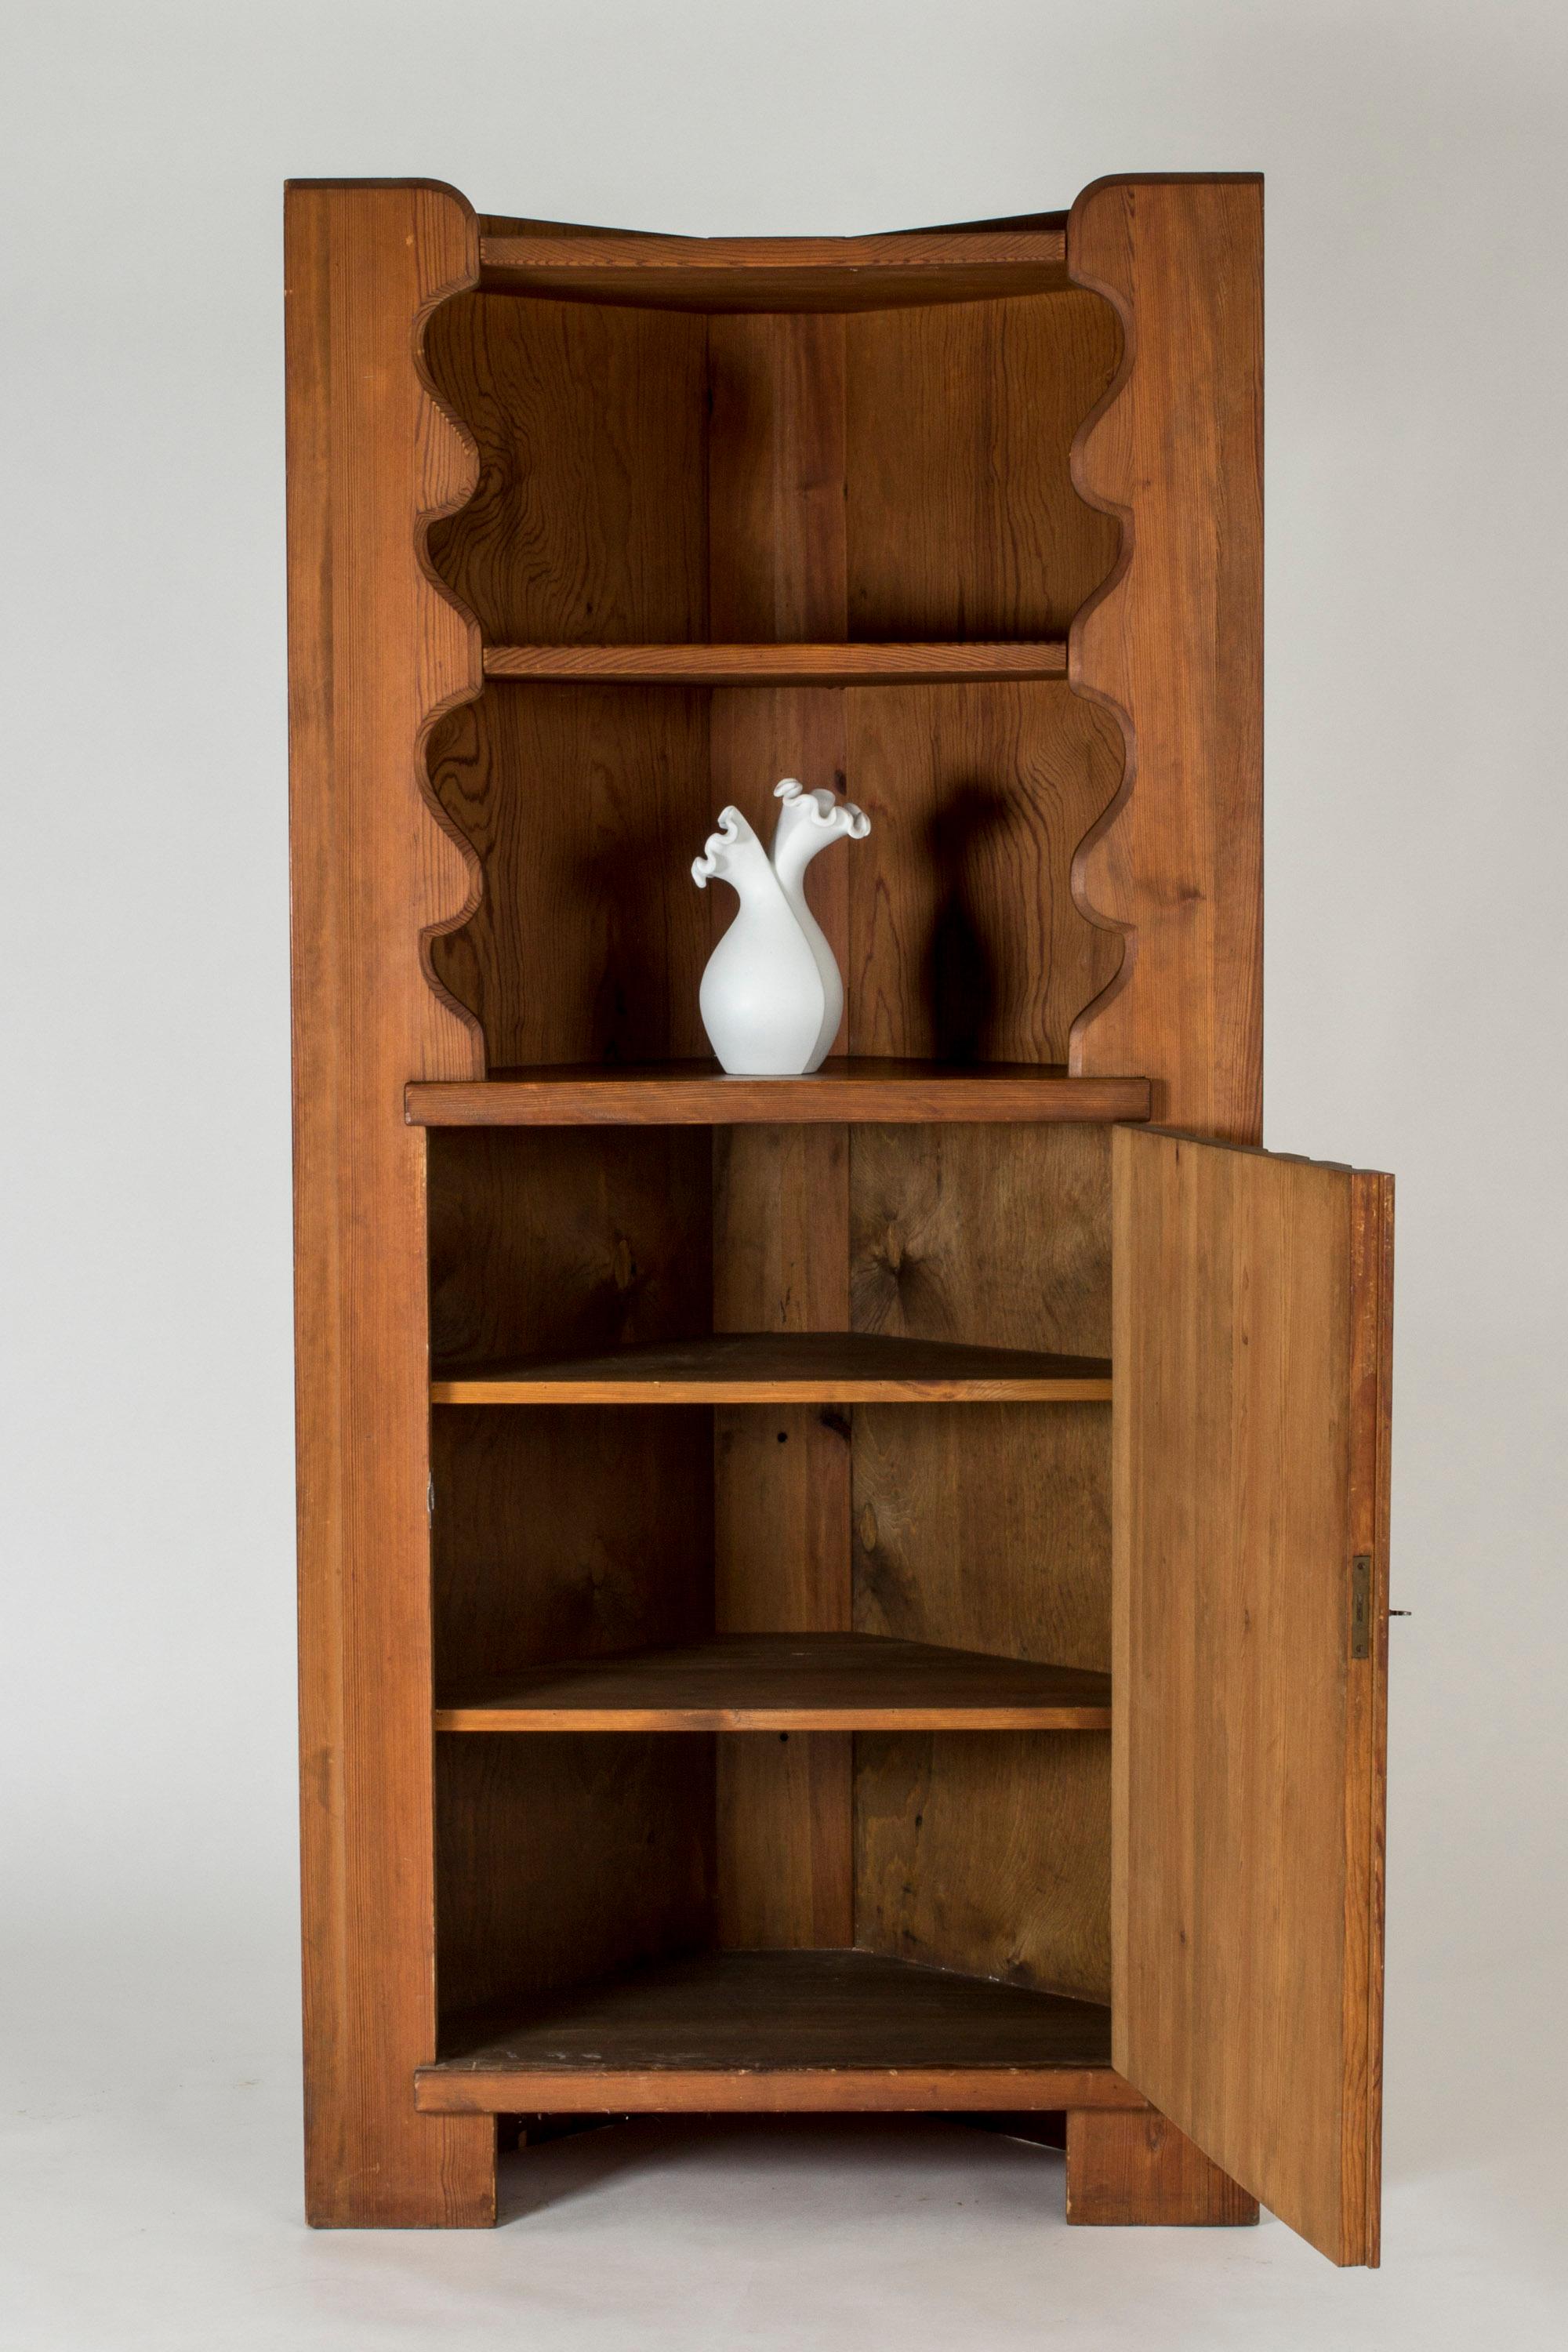 Pine Corner Cabinet, “Utö”, by Axel Einar Hjorth 2